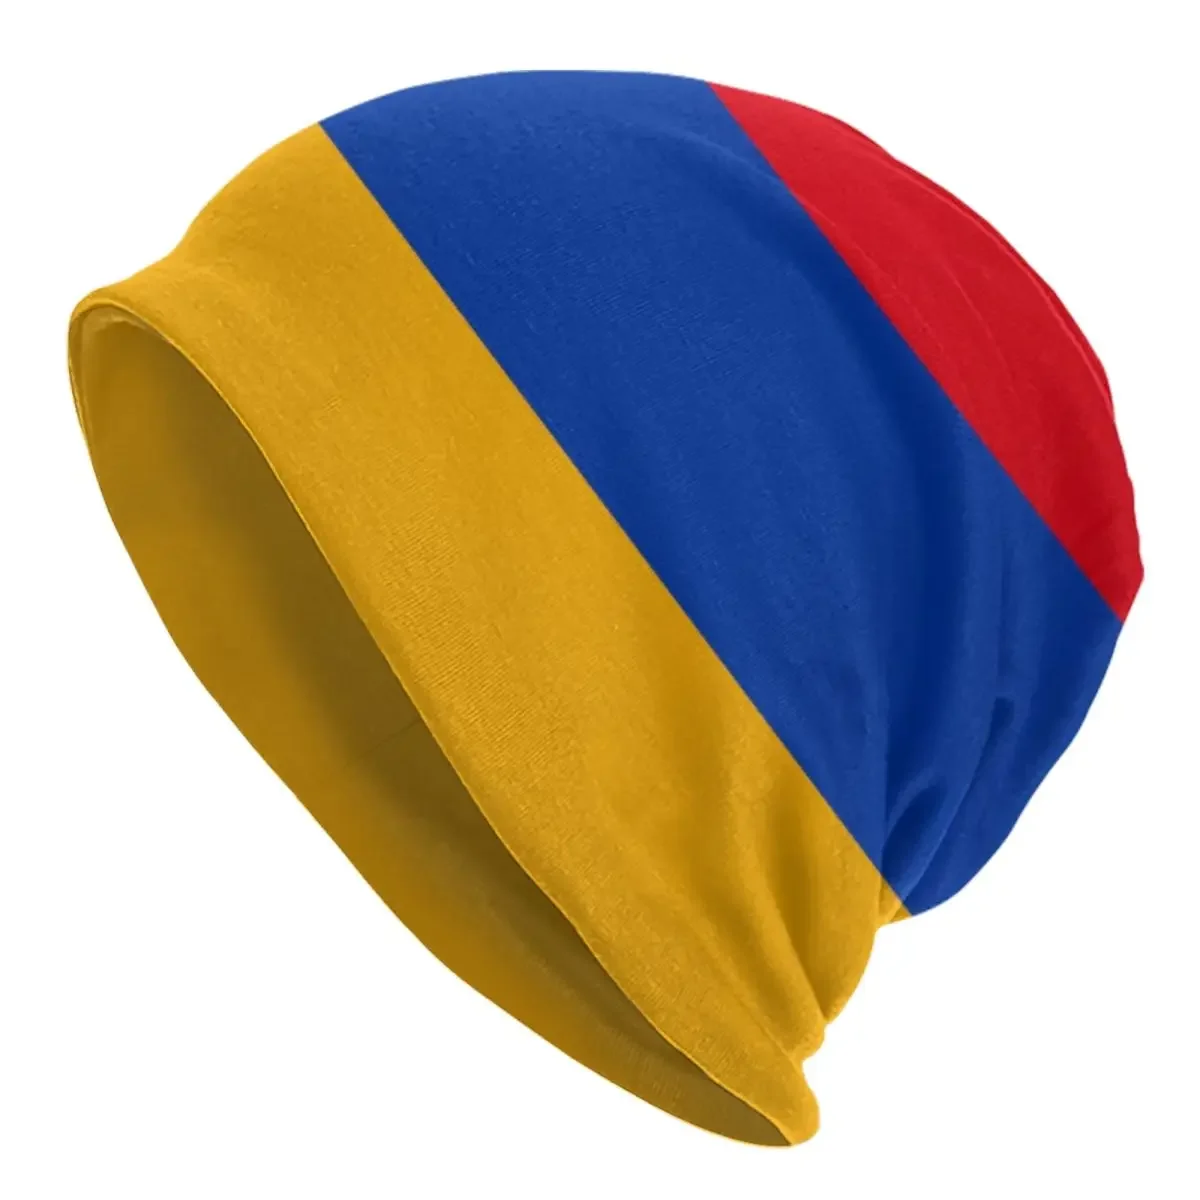 

Шапка с флагом Аргентины, шапки, уличная вязаная шапка для мужчин и женщин, теплые шапочки на осень и зиму, шапки-бини, шапки